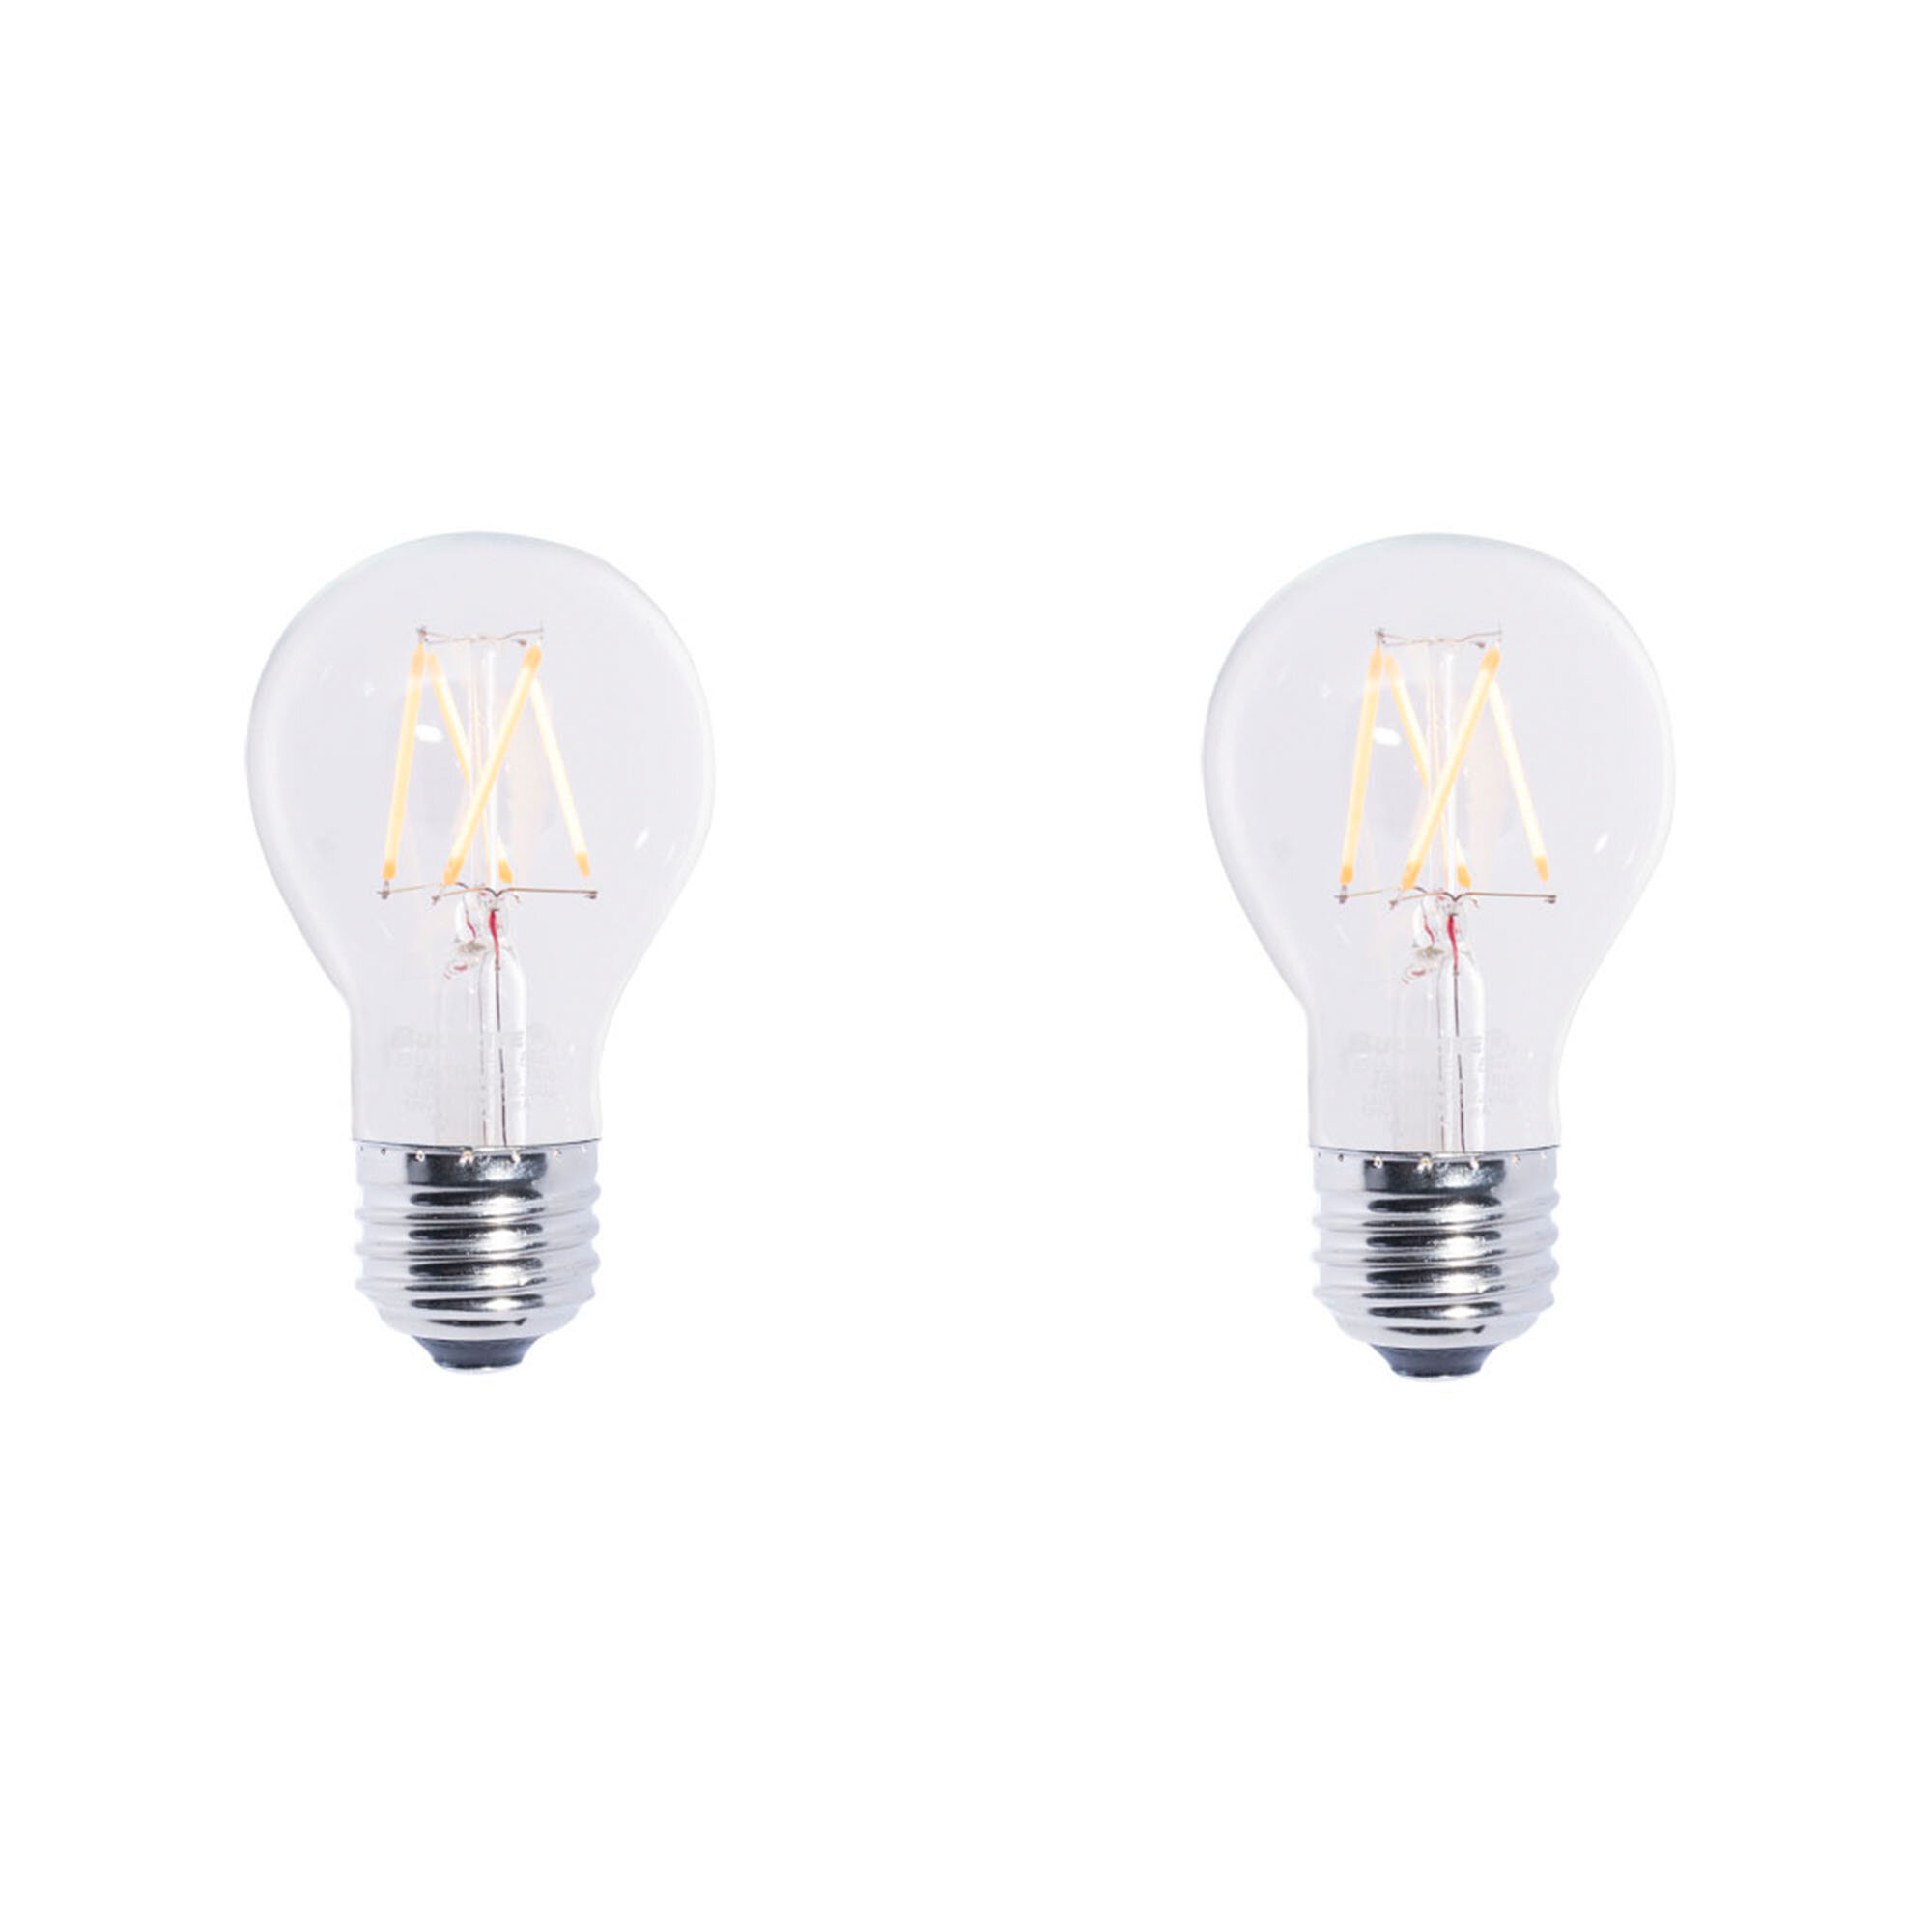 5W E26 Dimmable LED Light Bulb